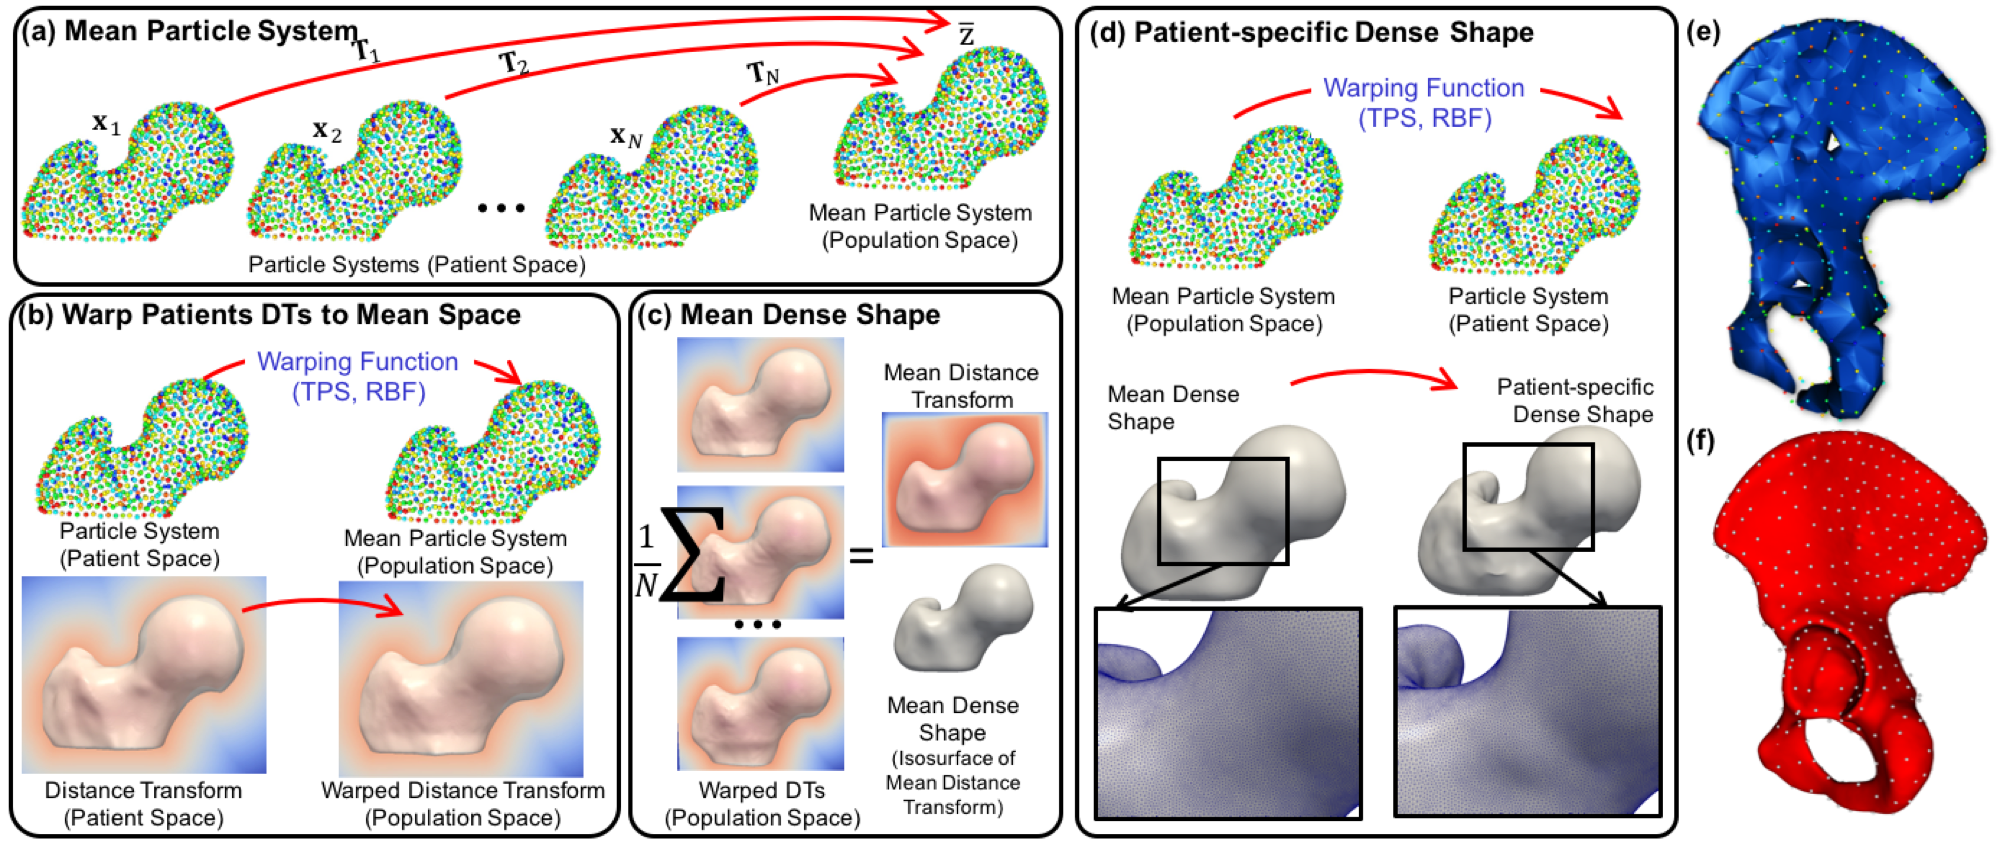 Shape modes derived from statistical shape modelling describe left